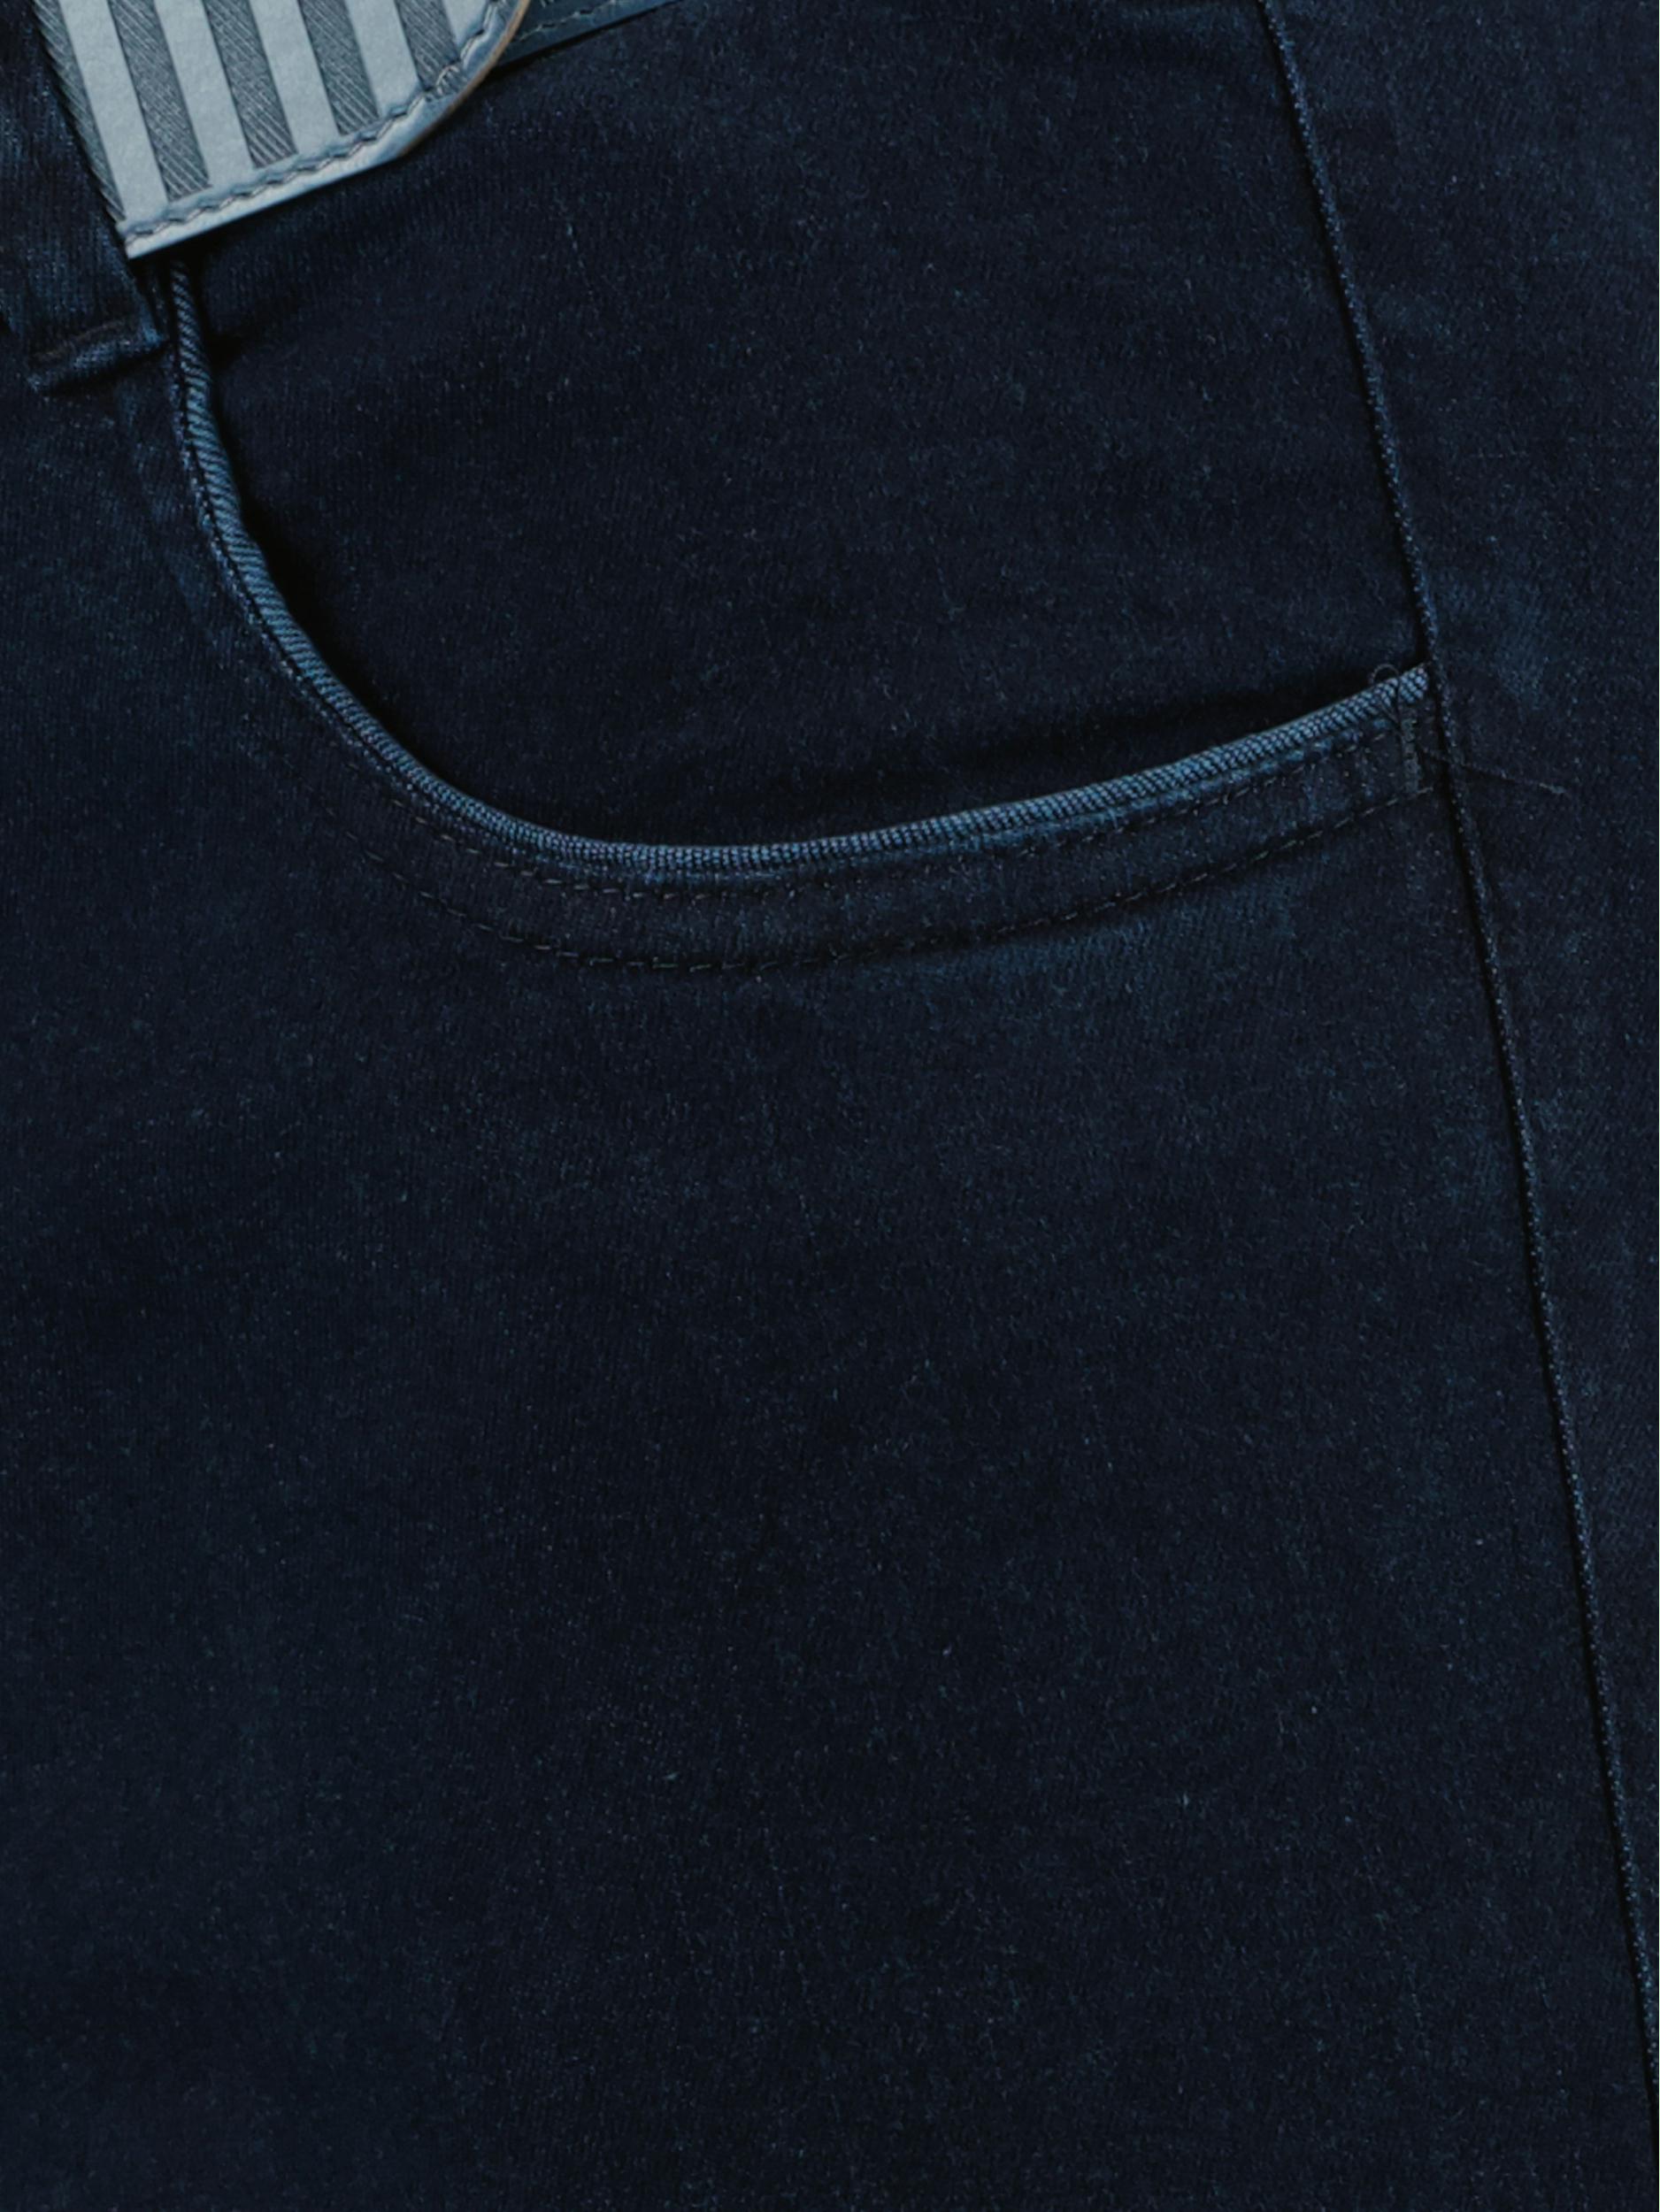 F043 Flatfront Jeans Blauw City 5-pocket 2081.1.11.170/606